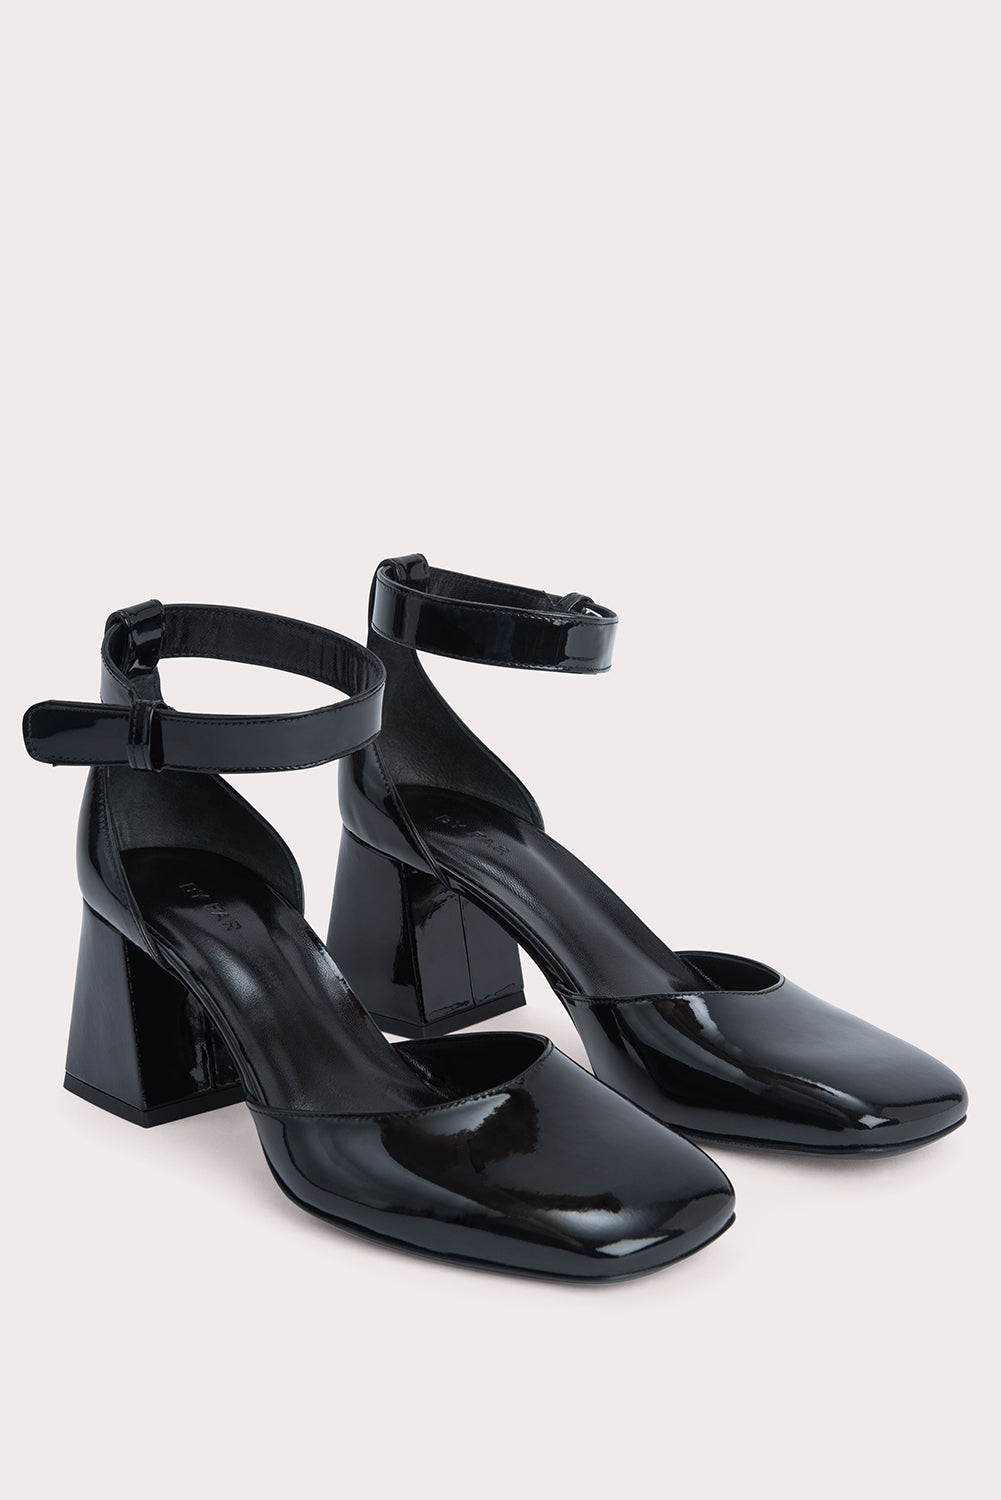 Patent leather heels Identita Black size 37 EU in Patent leather - 31650471